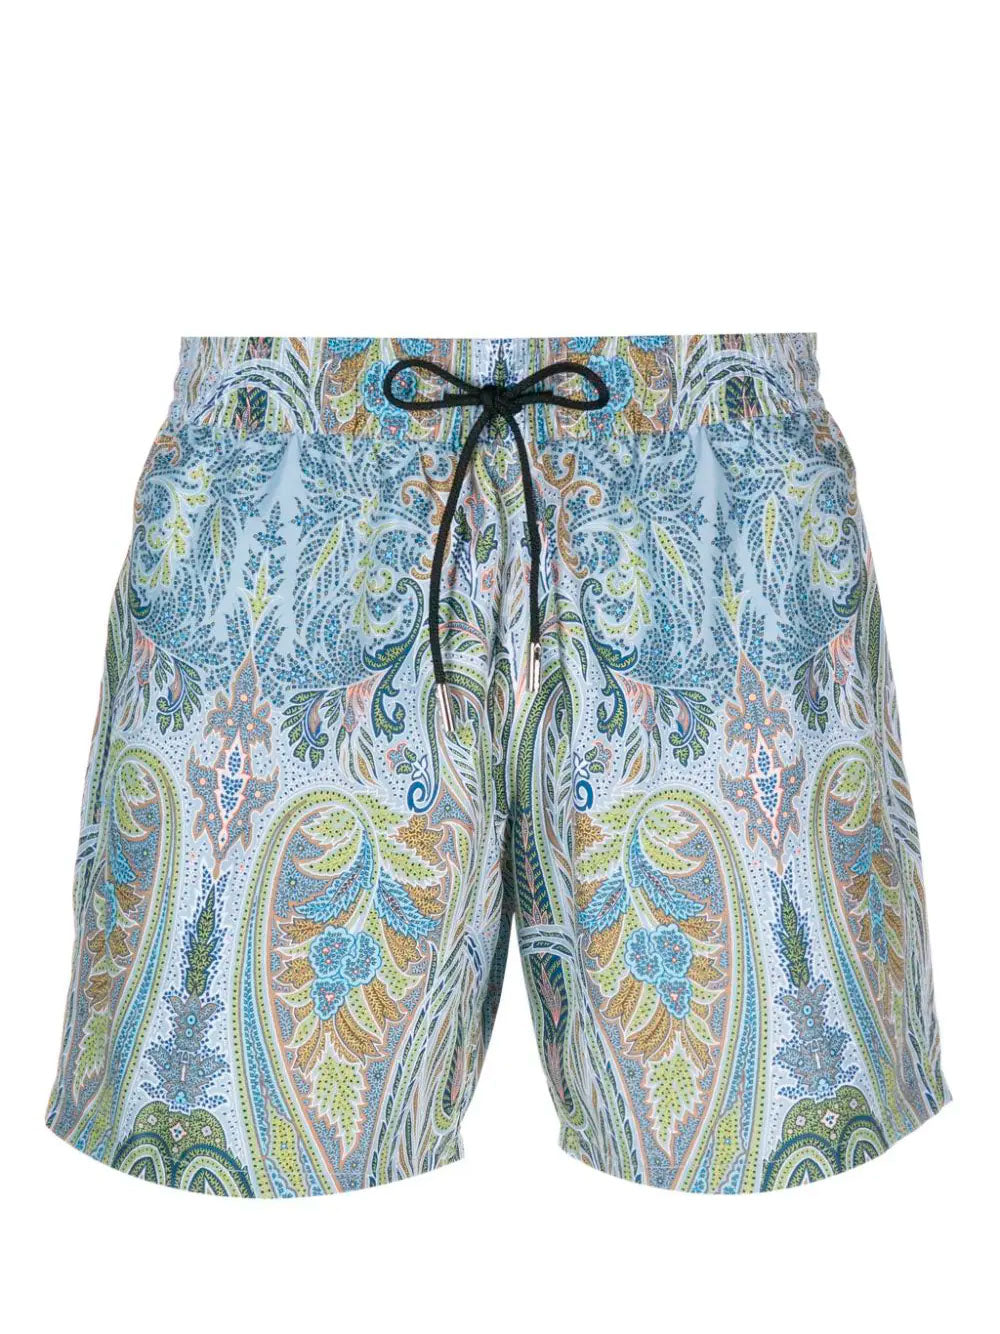 Paisley print swim shorts